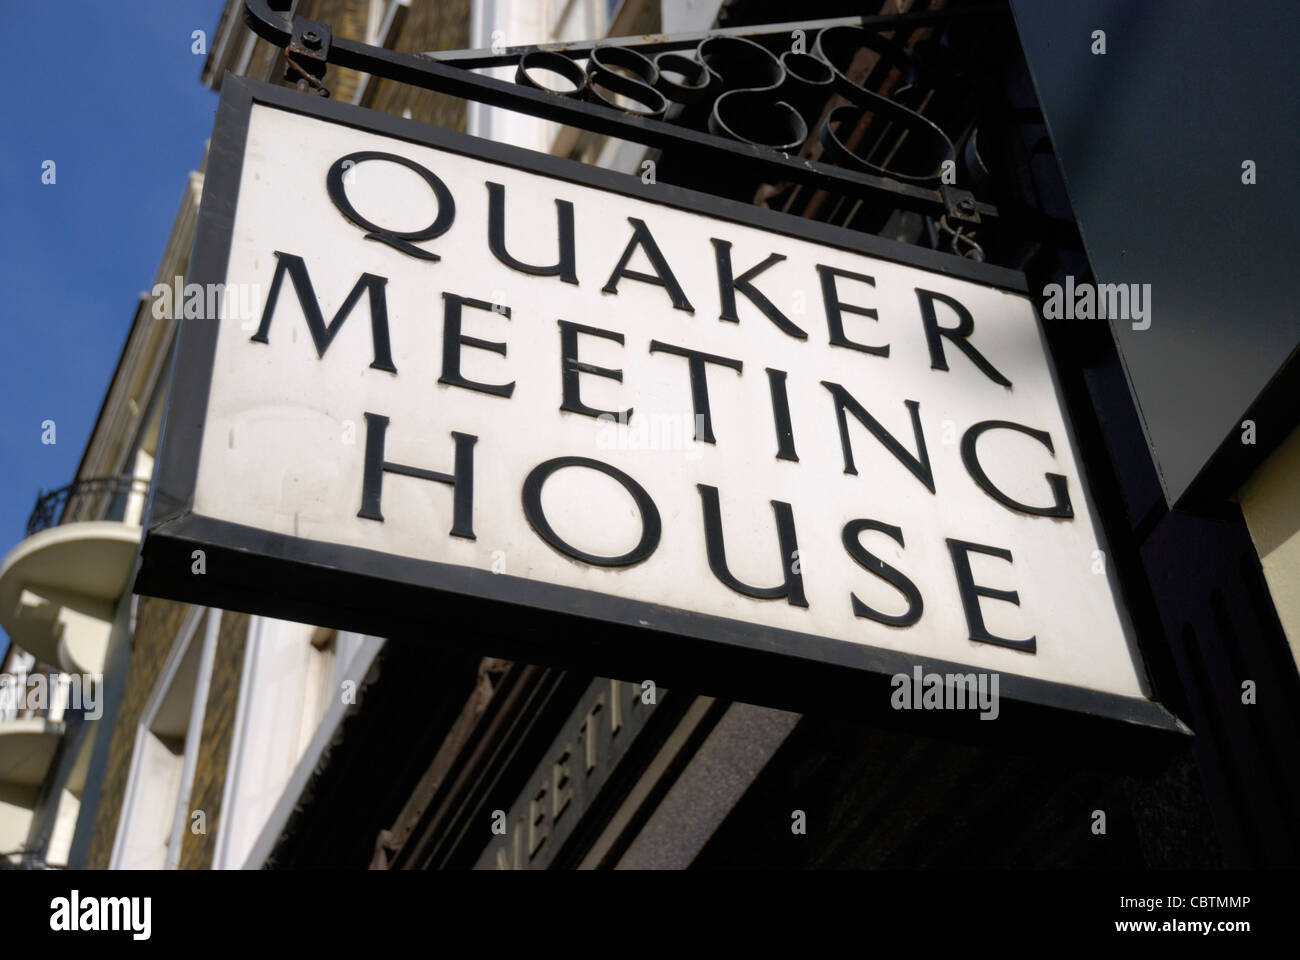 Quaker Meeting House in St Martin’s Lane, London, England Stock Photo